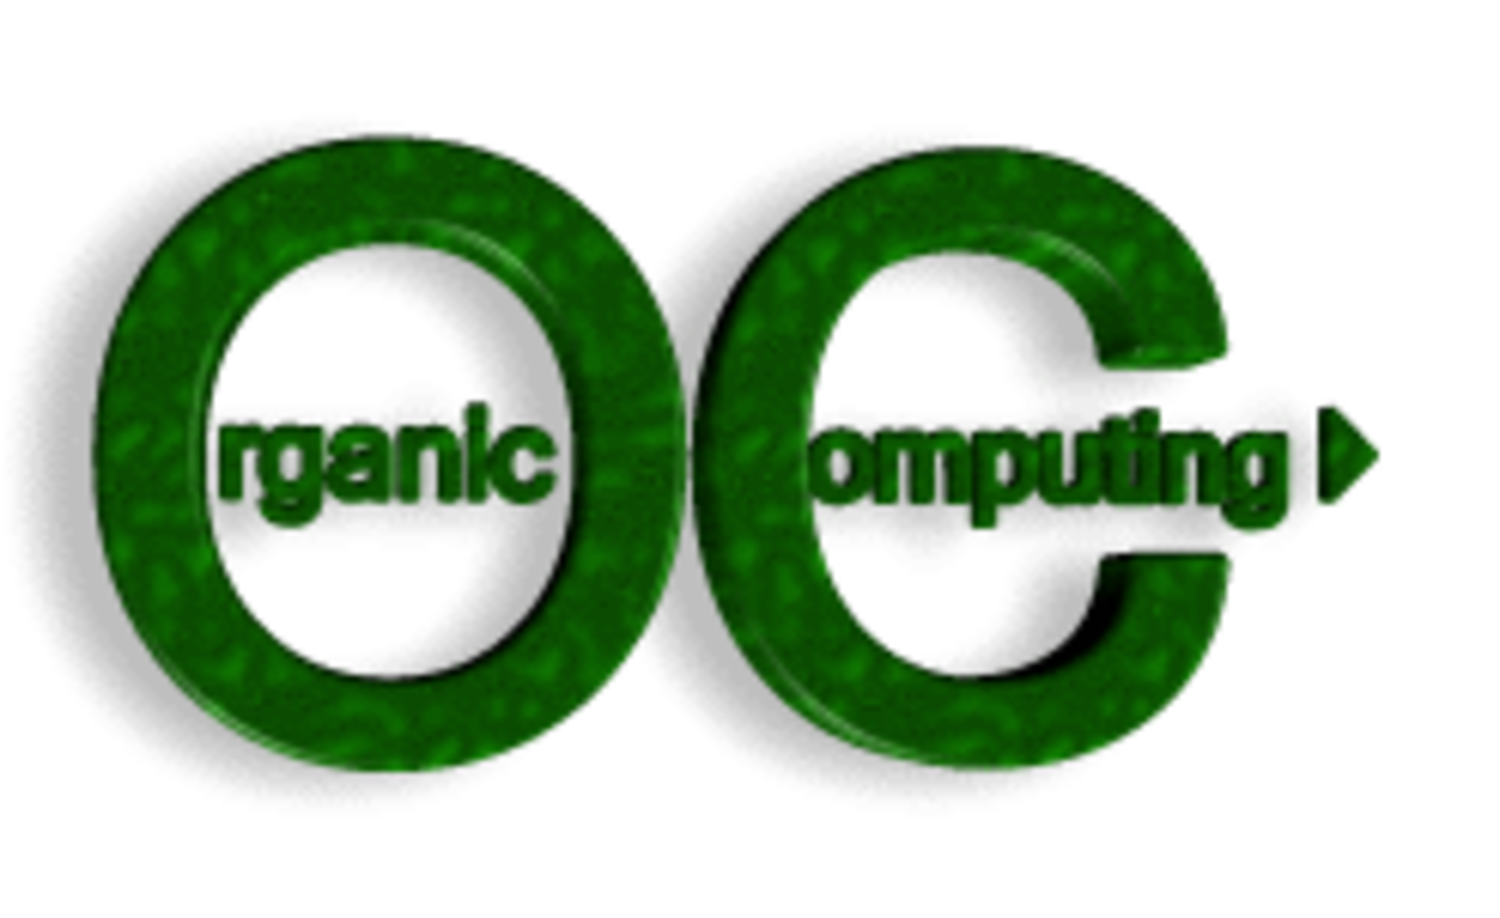 Organic Computing